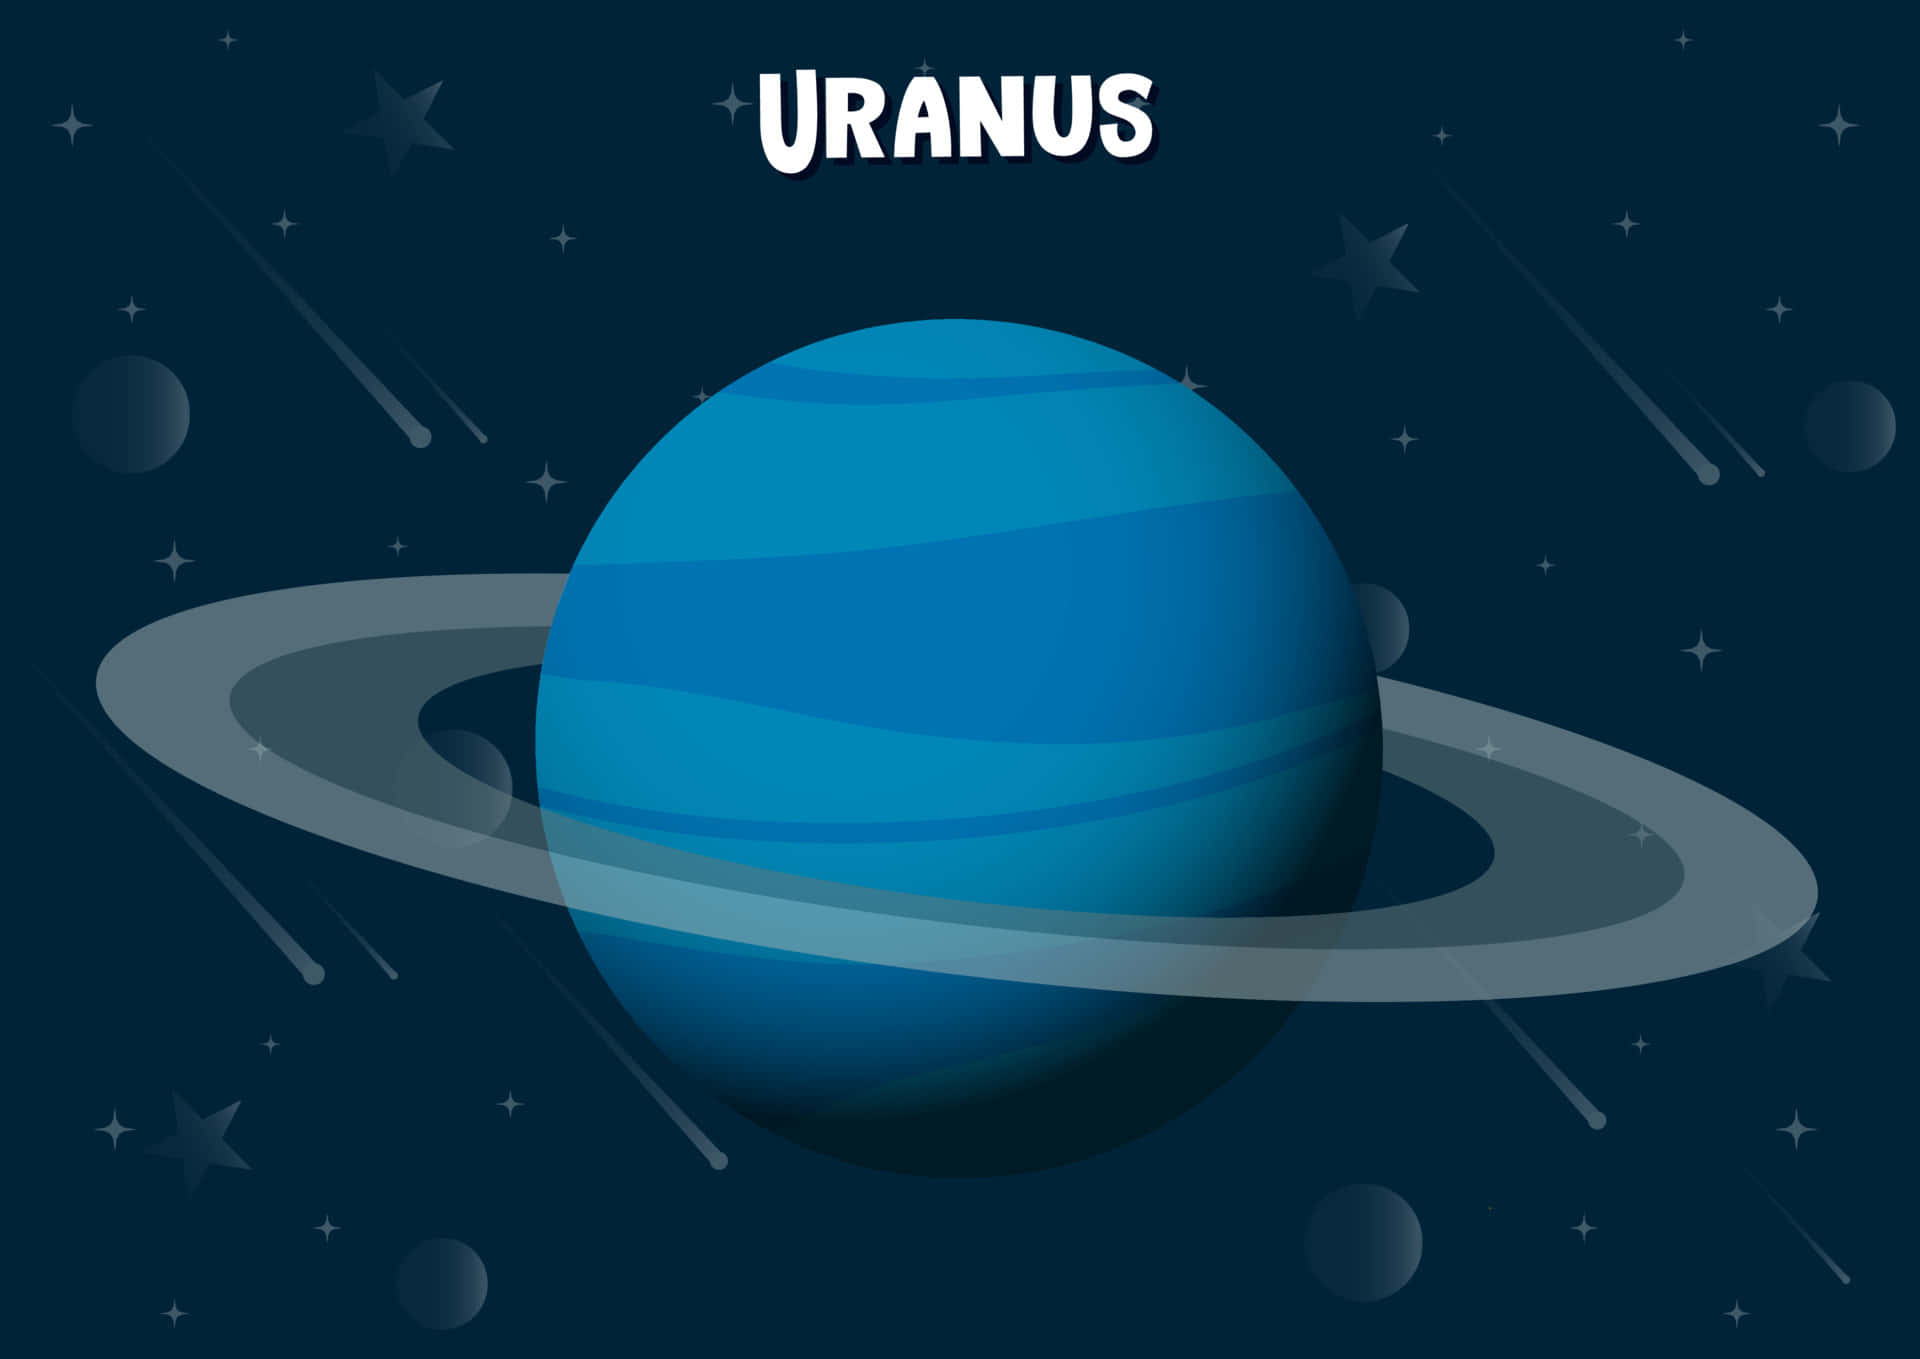 View of the Planet Uranus